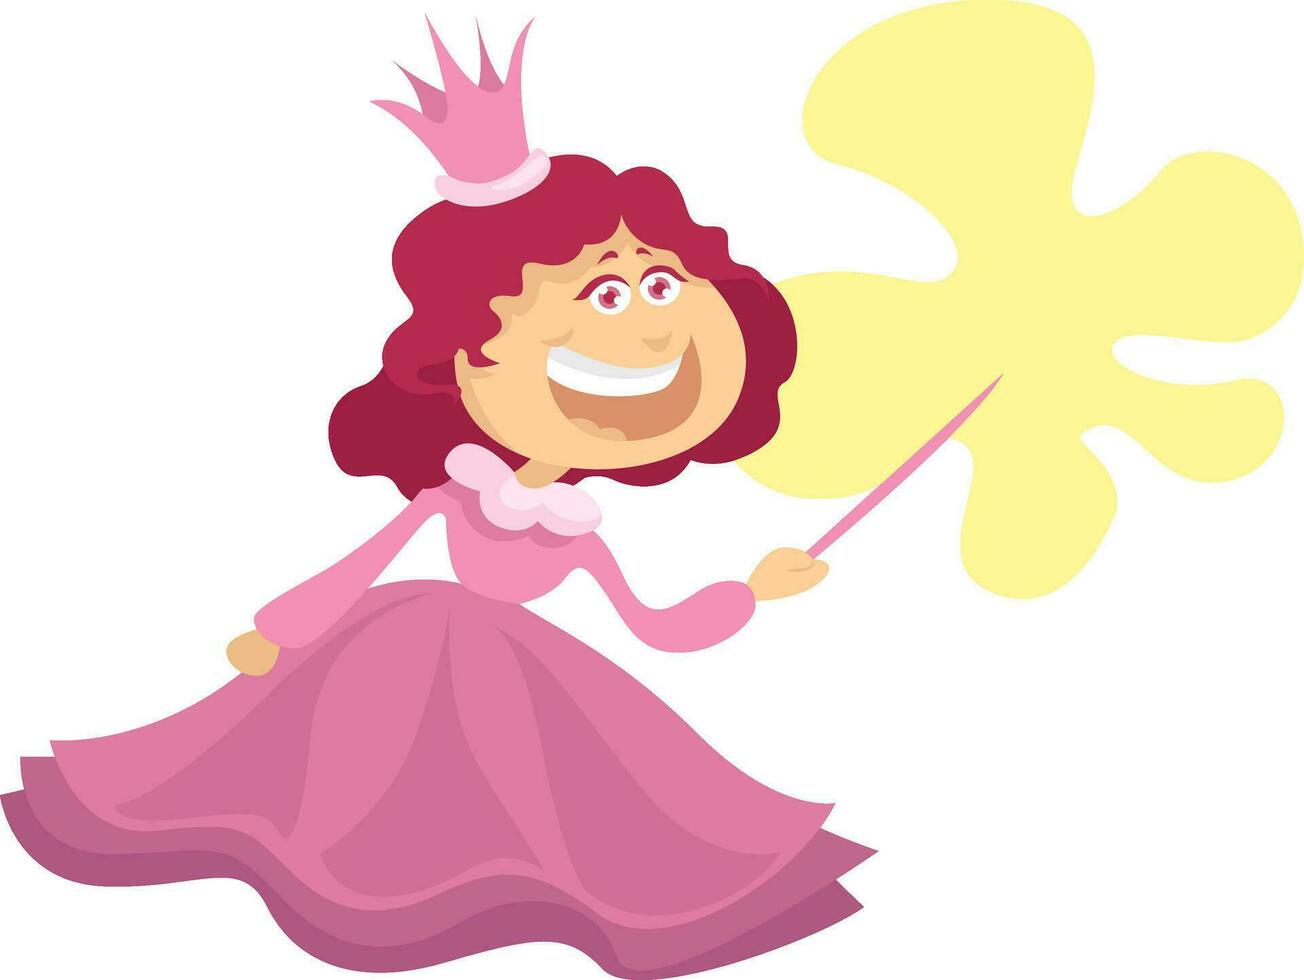 prinsessa med magi trollstav, illustration, vektor på en vit bakgrund.